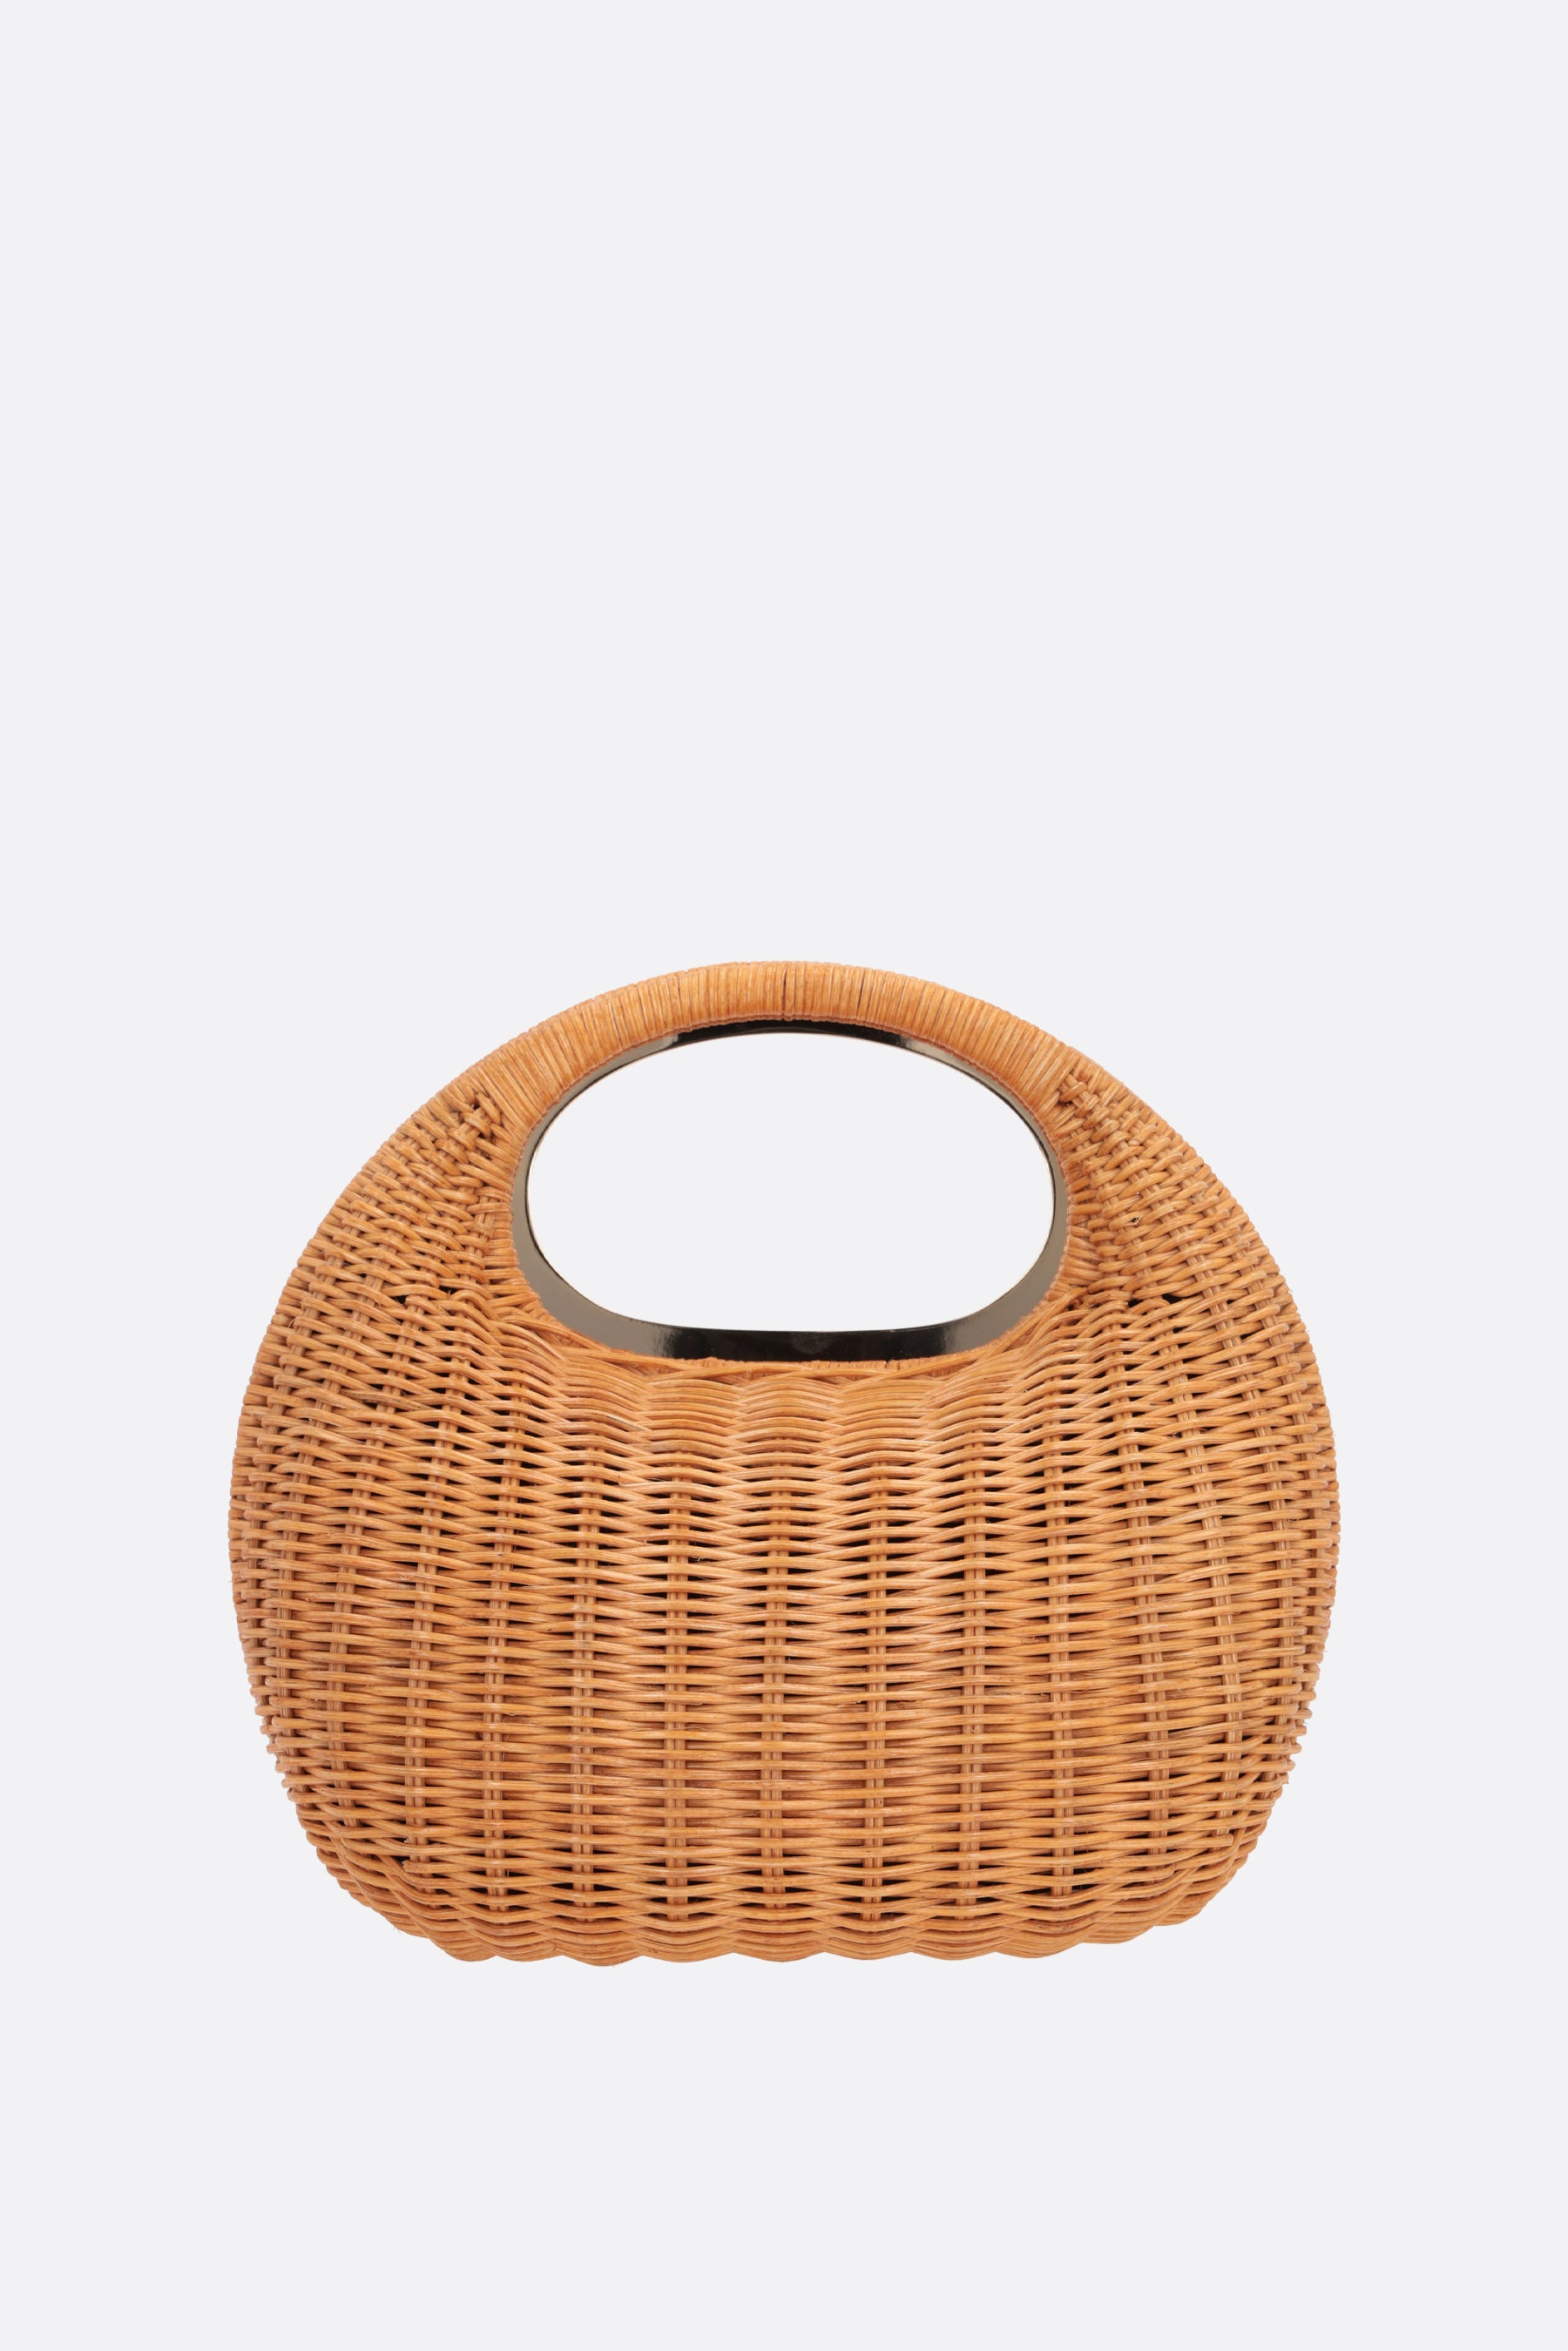 Round rattan handbag